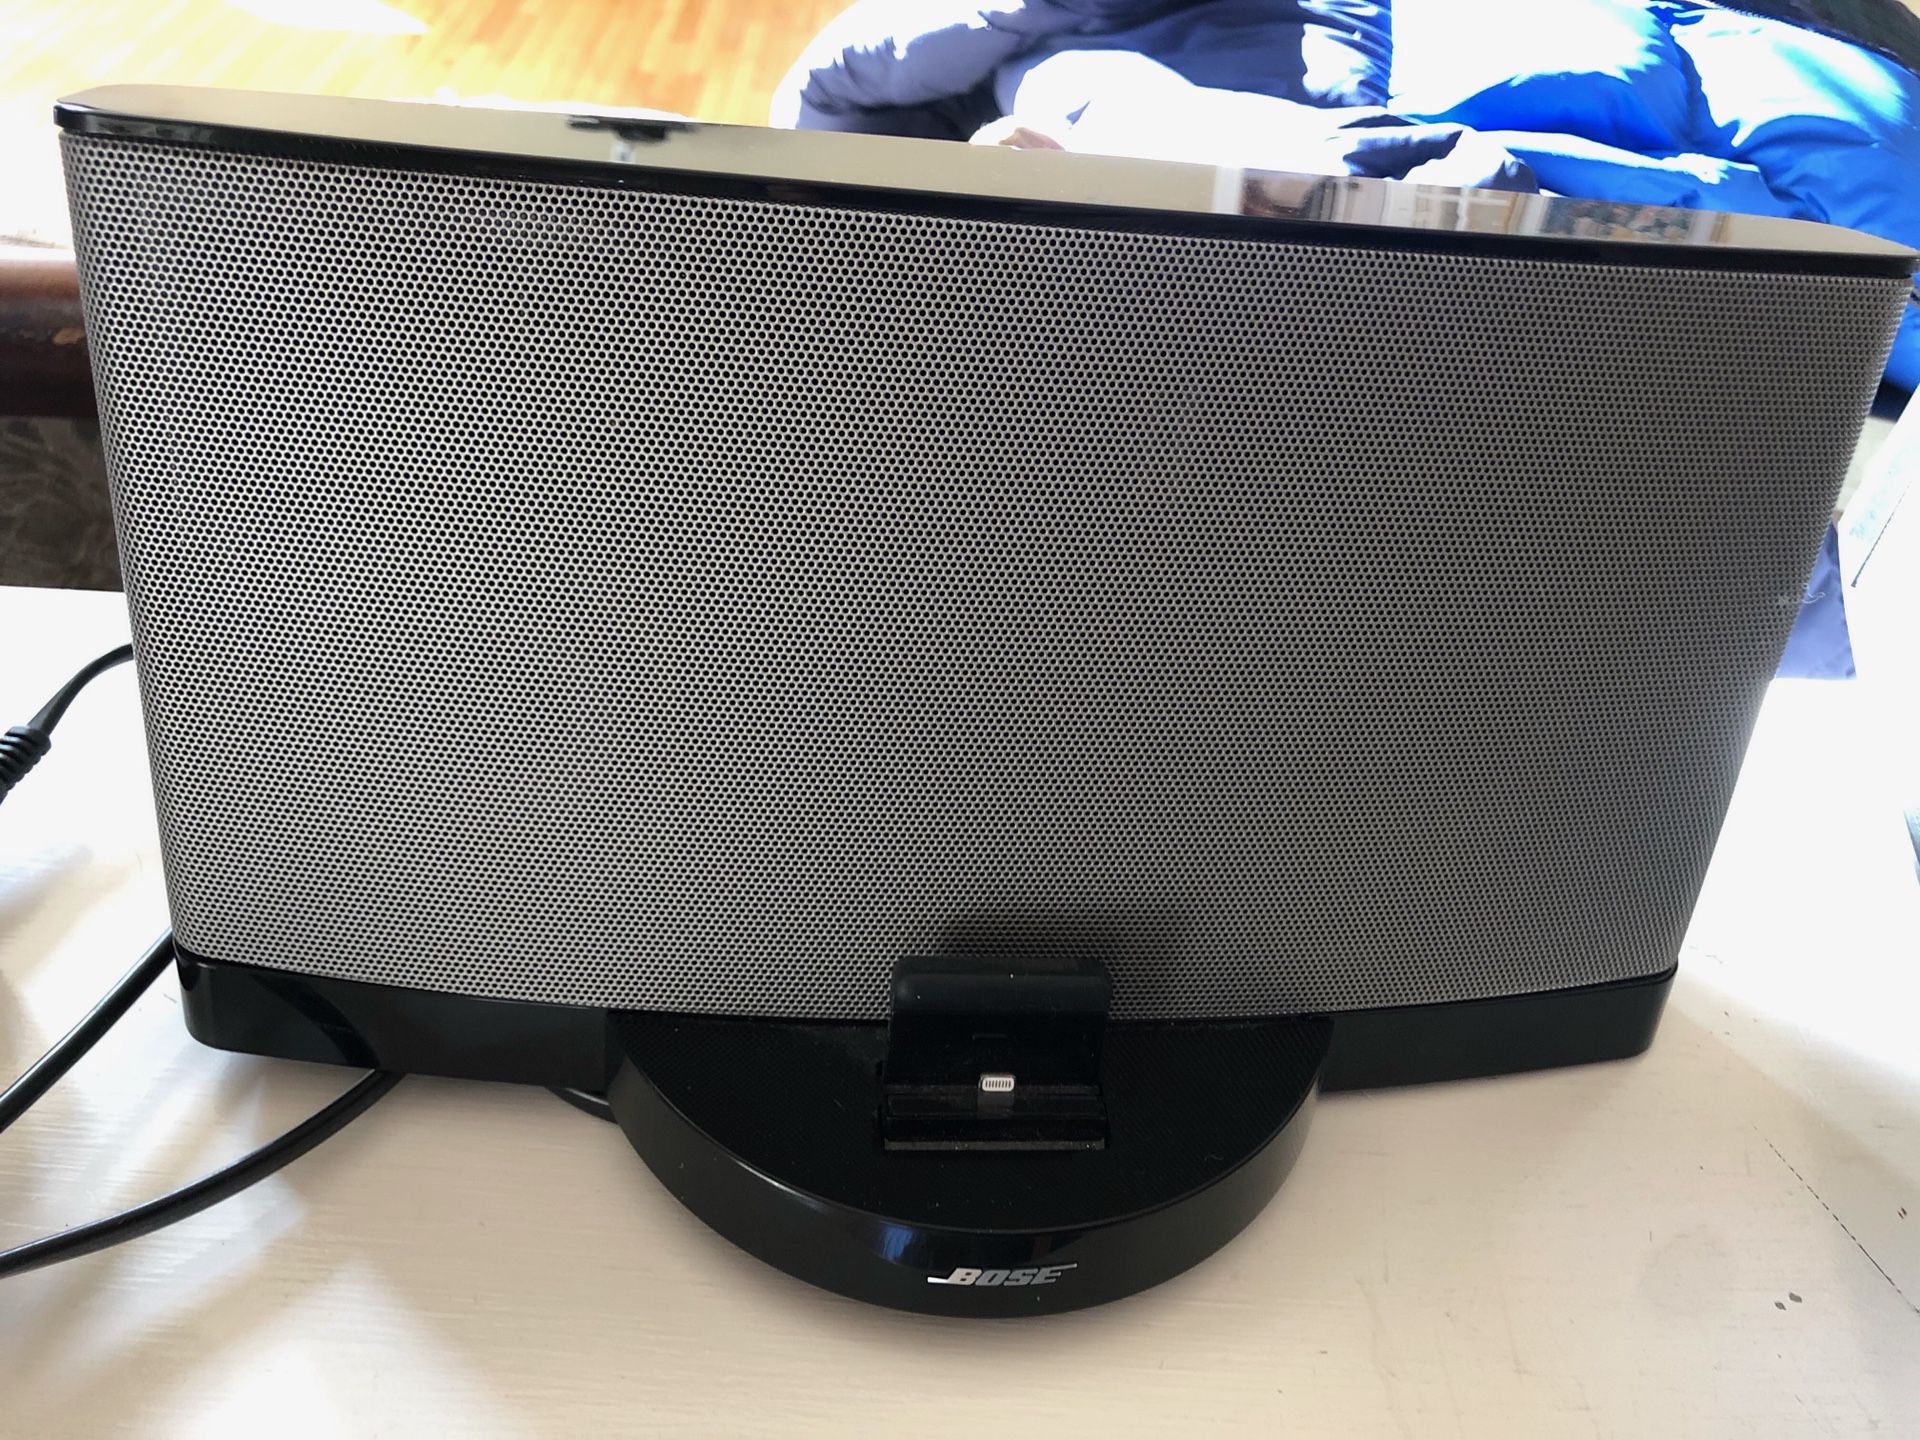 Bose sounddock series III speaker